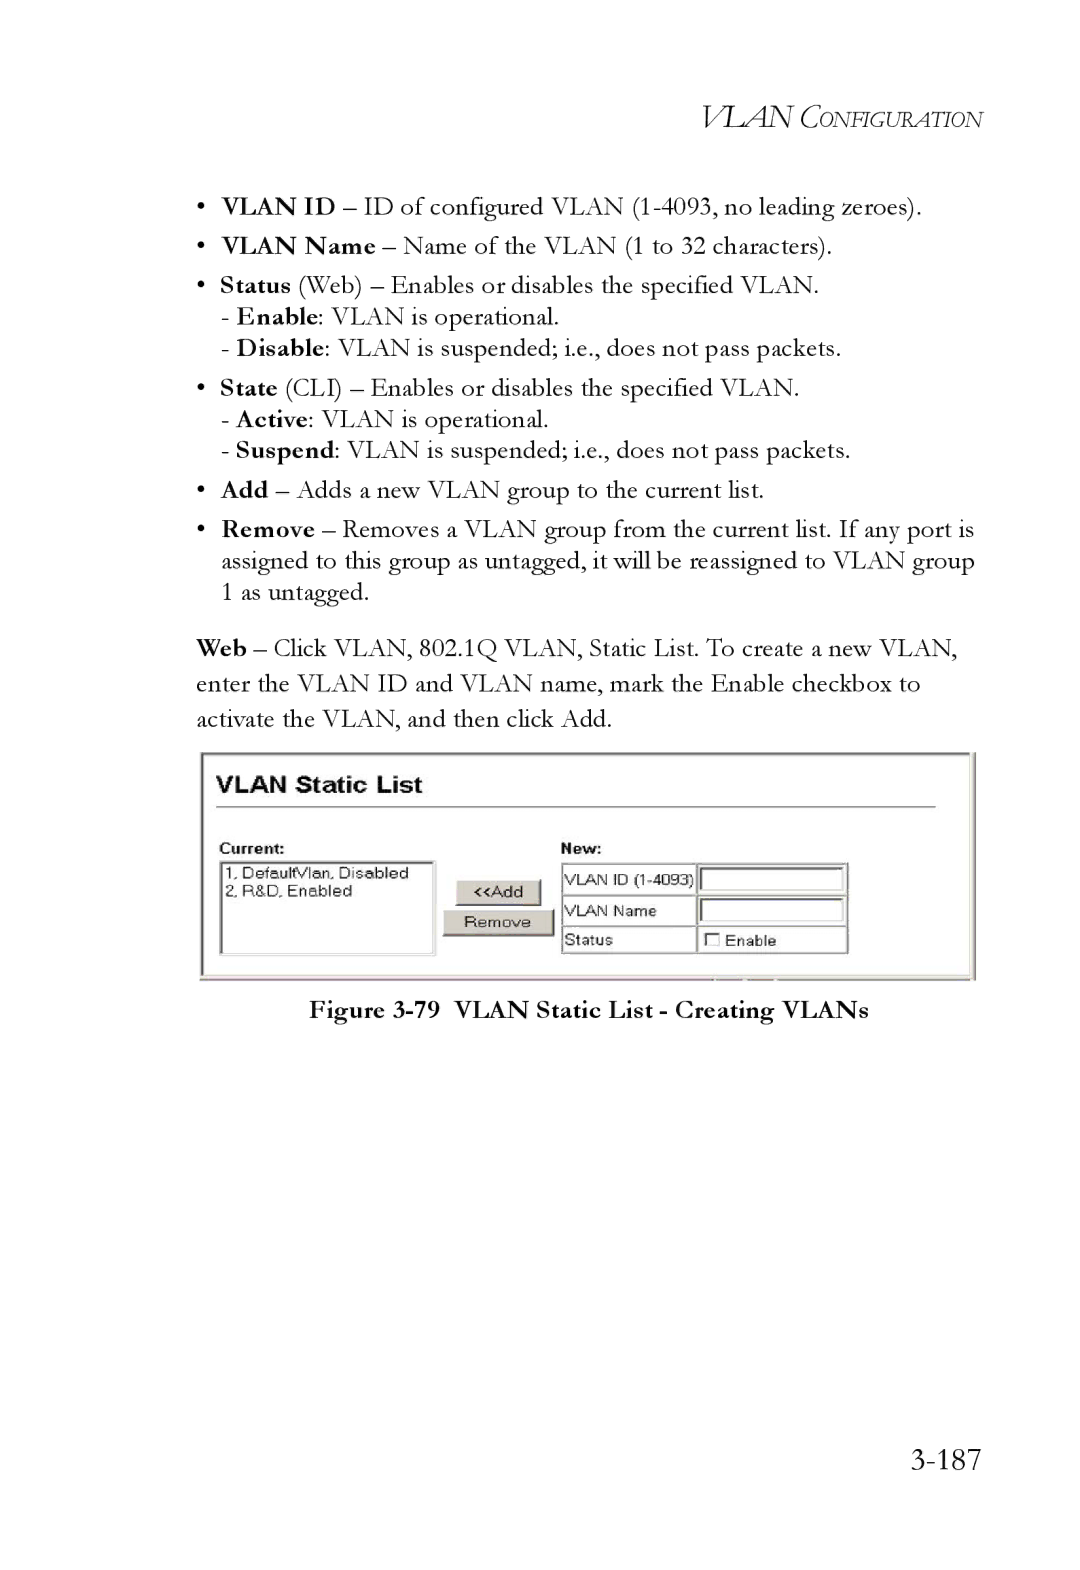 SMC Networks SMC6824M manual 187, Vlan Static List Creating VLANs 